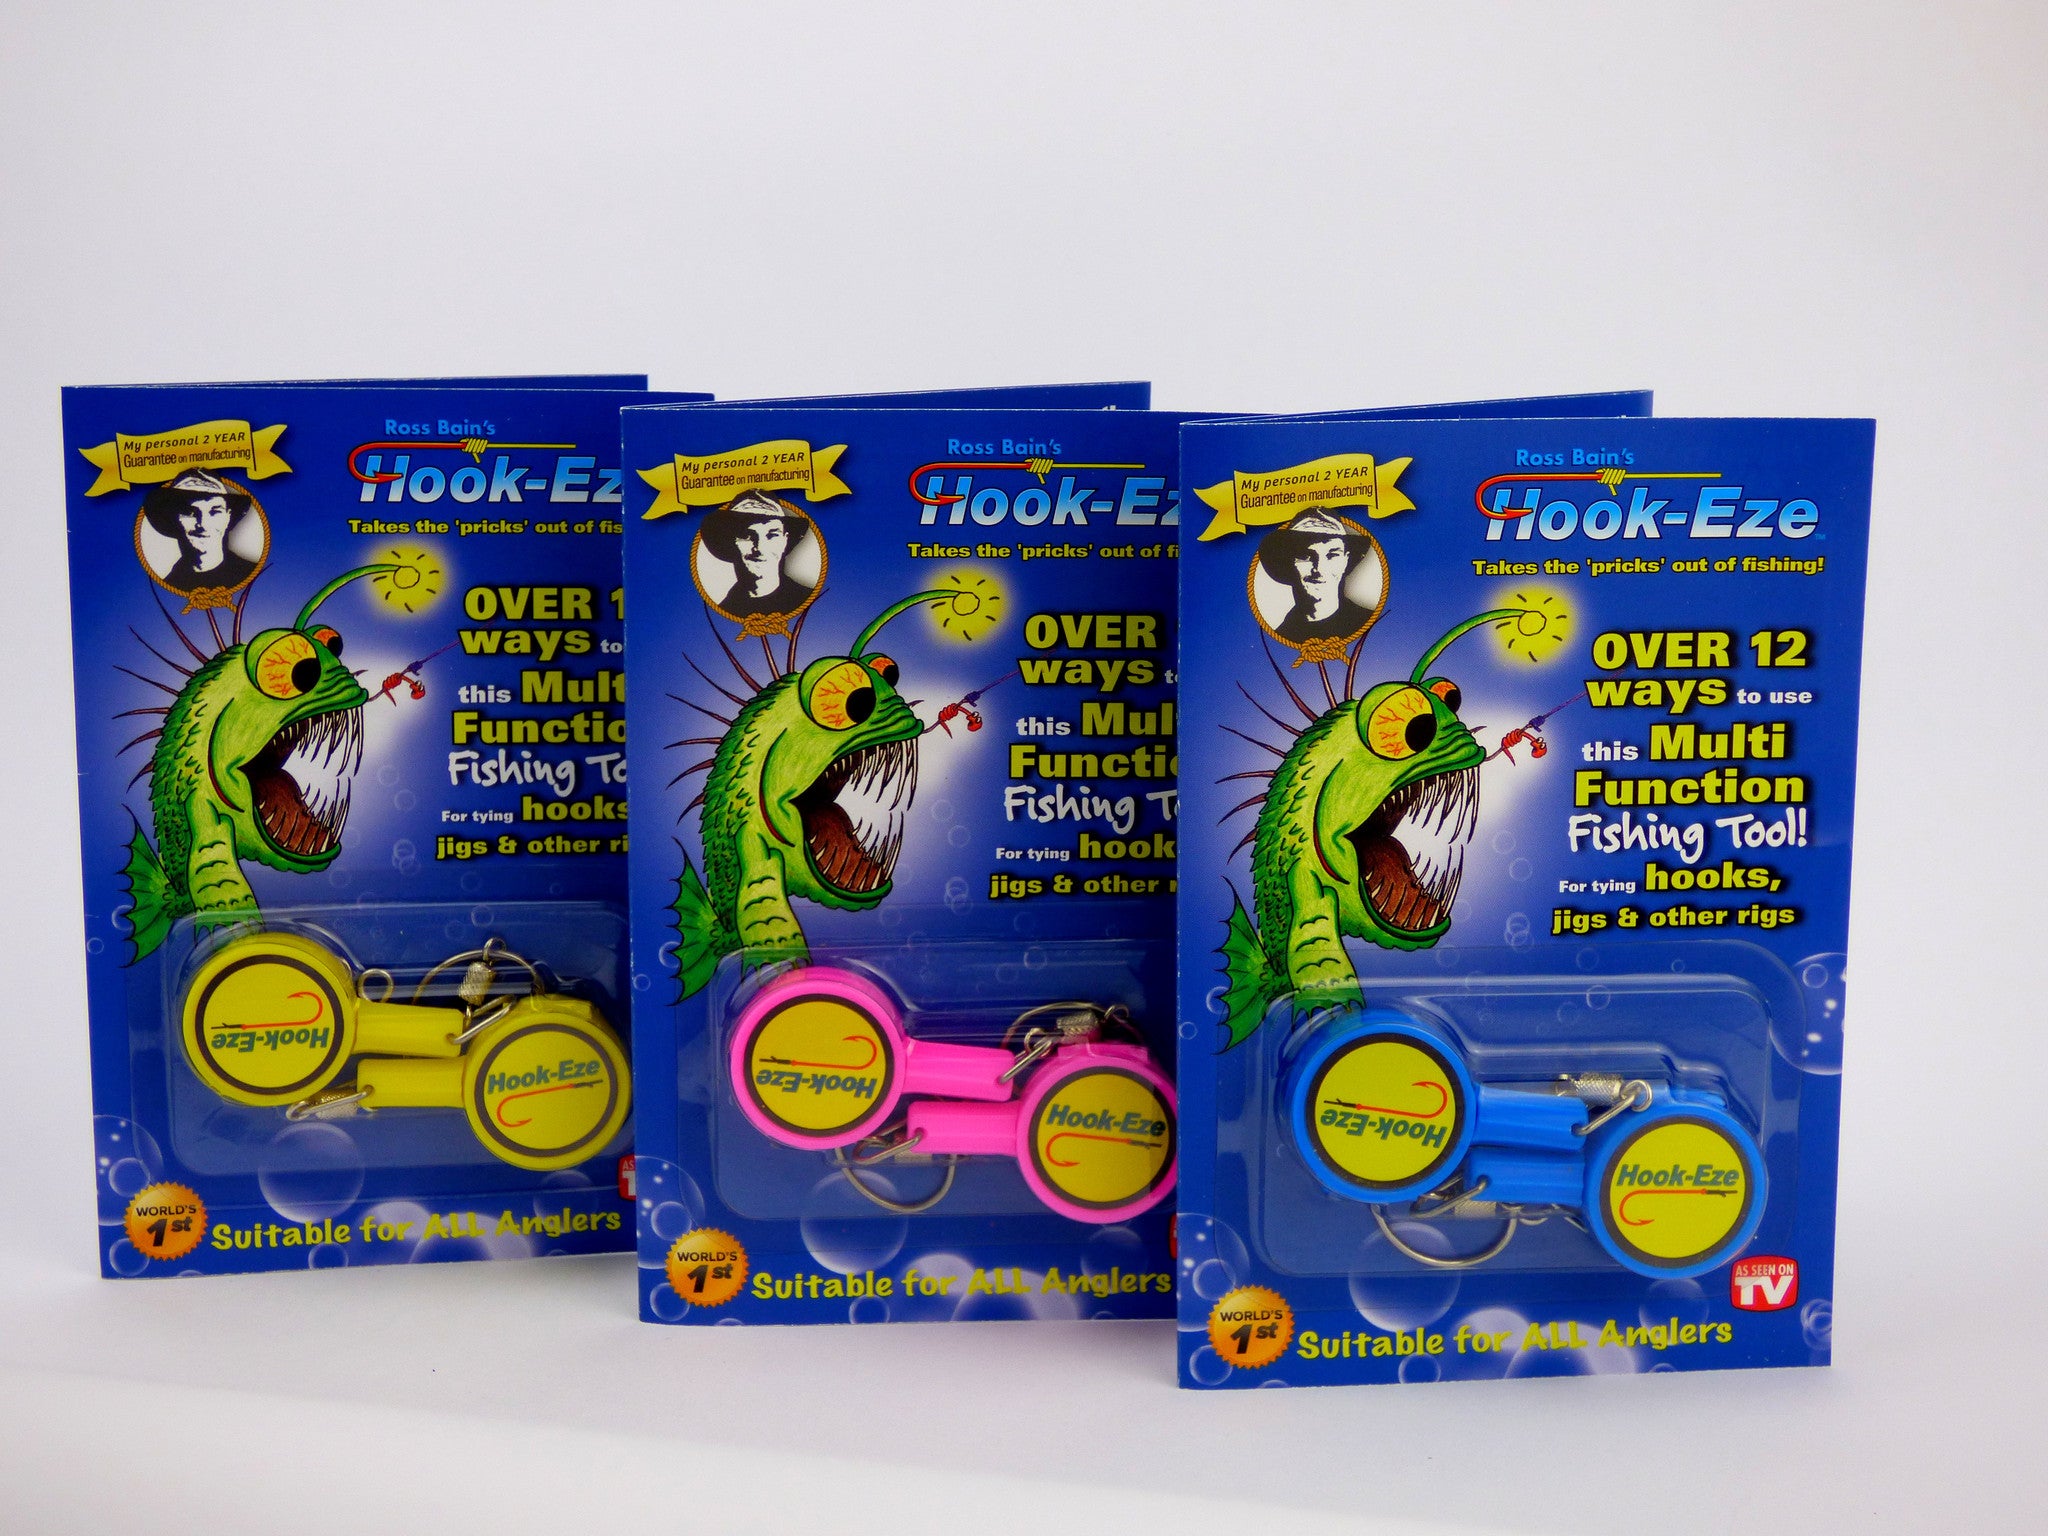 Hookeze is Australia's HOTTEST multi function fishing tool! – Hook